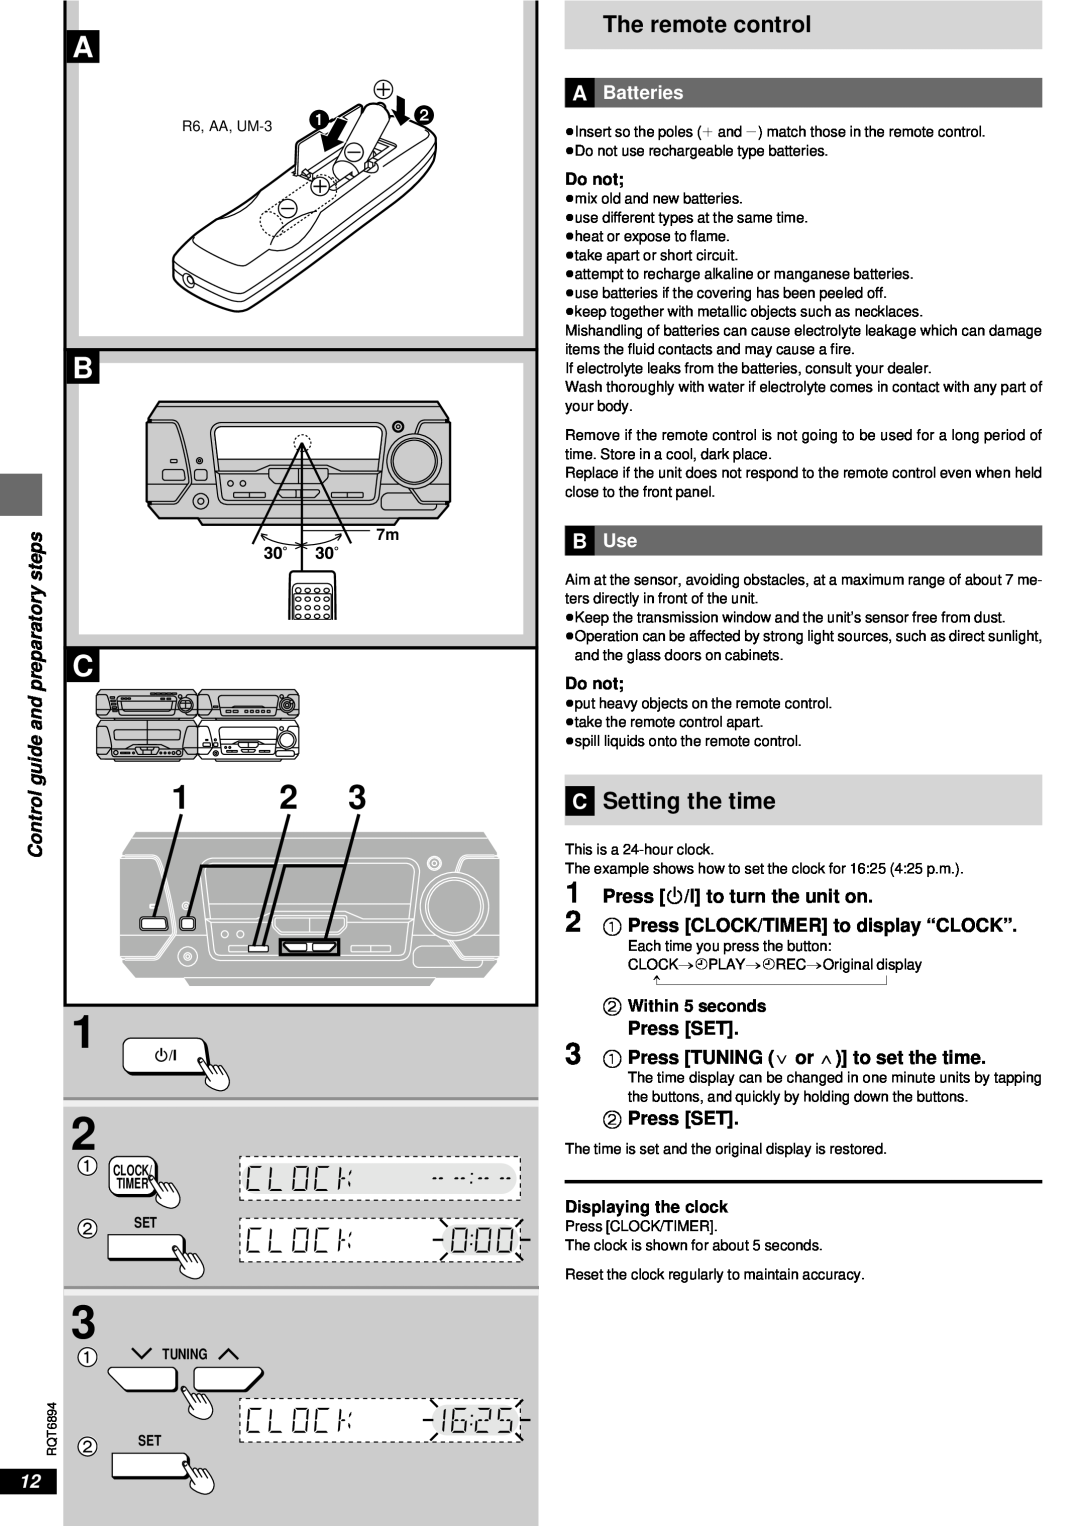 Technics SC-DV290 12 Í/I, The remote control, CSetting the time, steps, Control, Press /I to turn the unit on, Press SET 